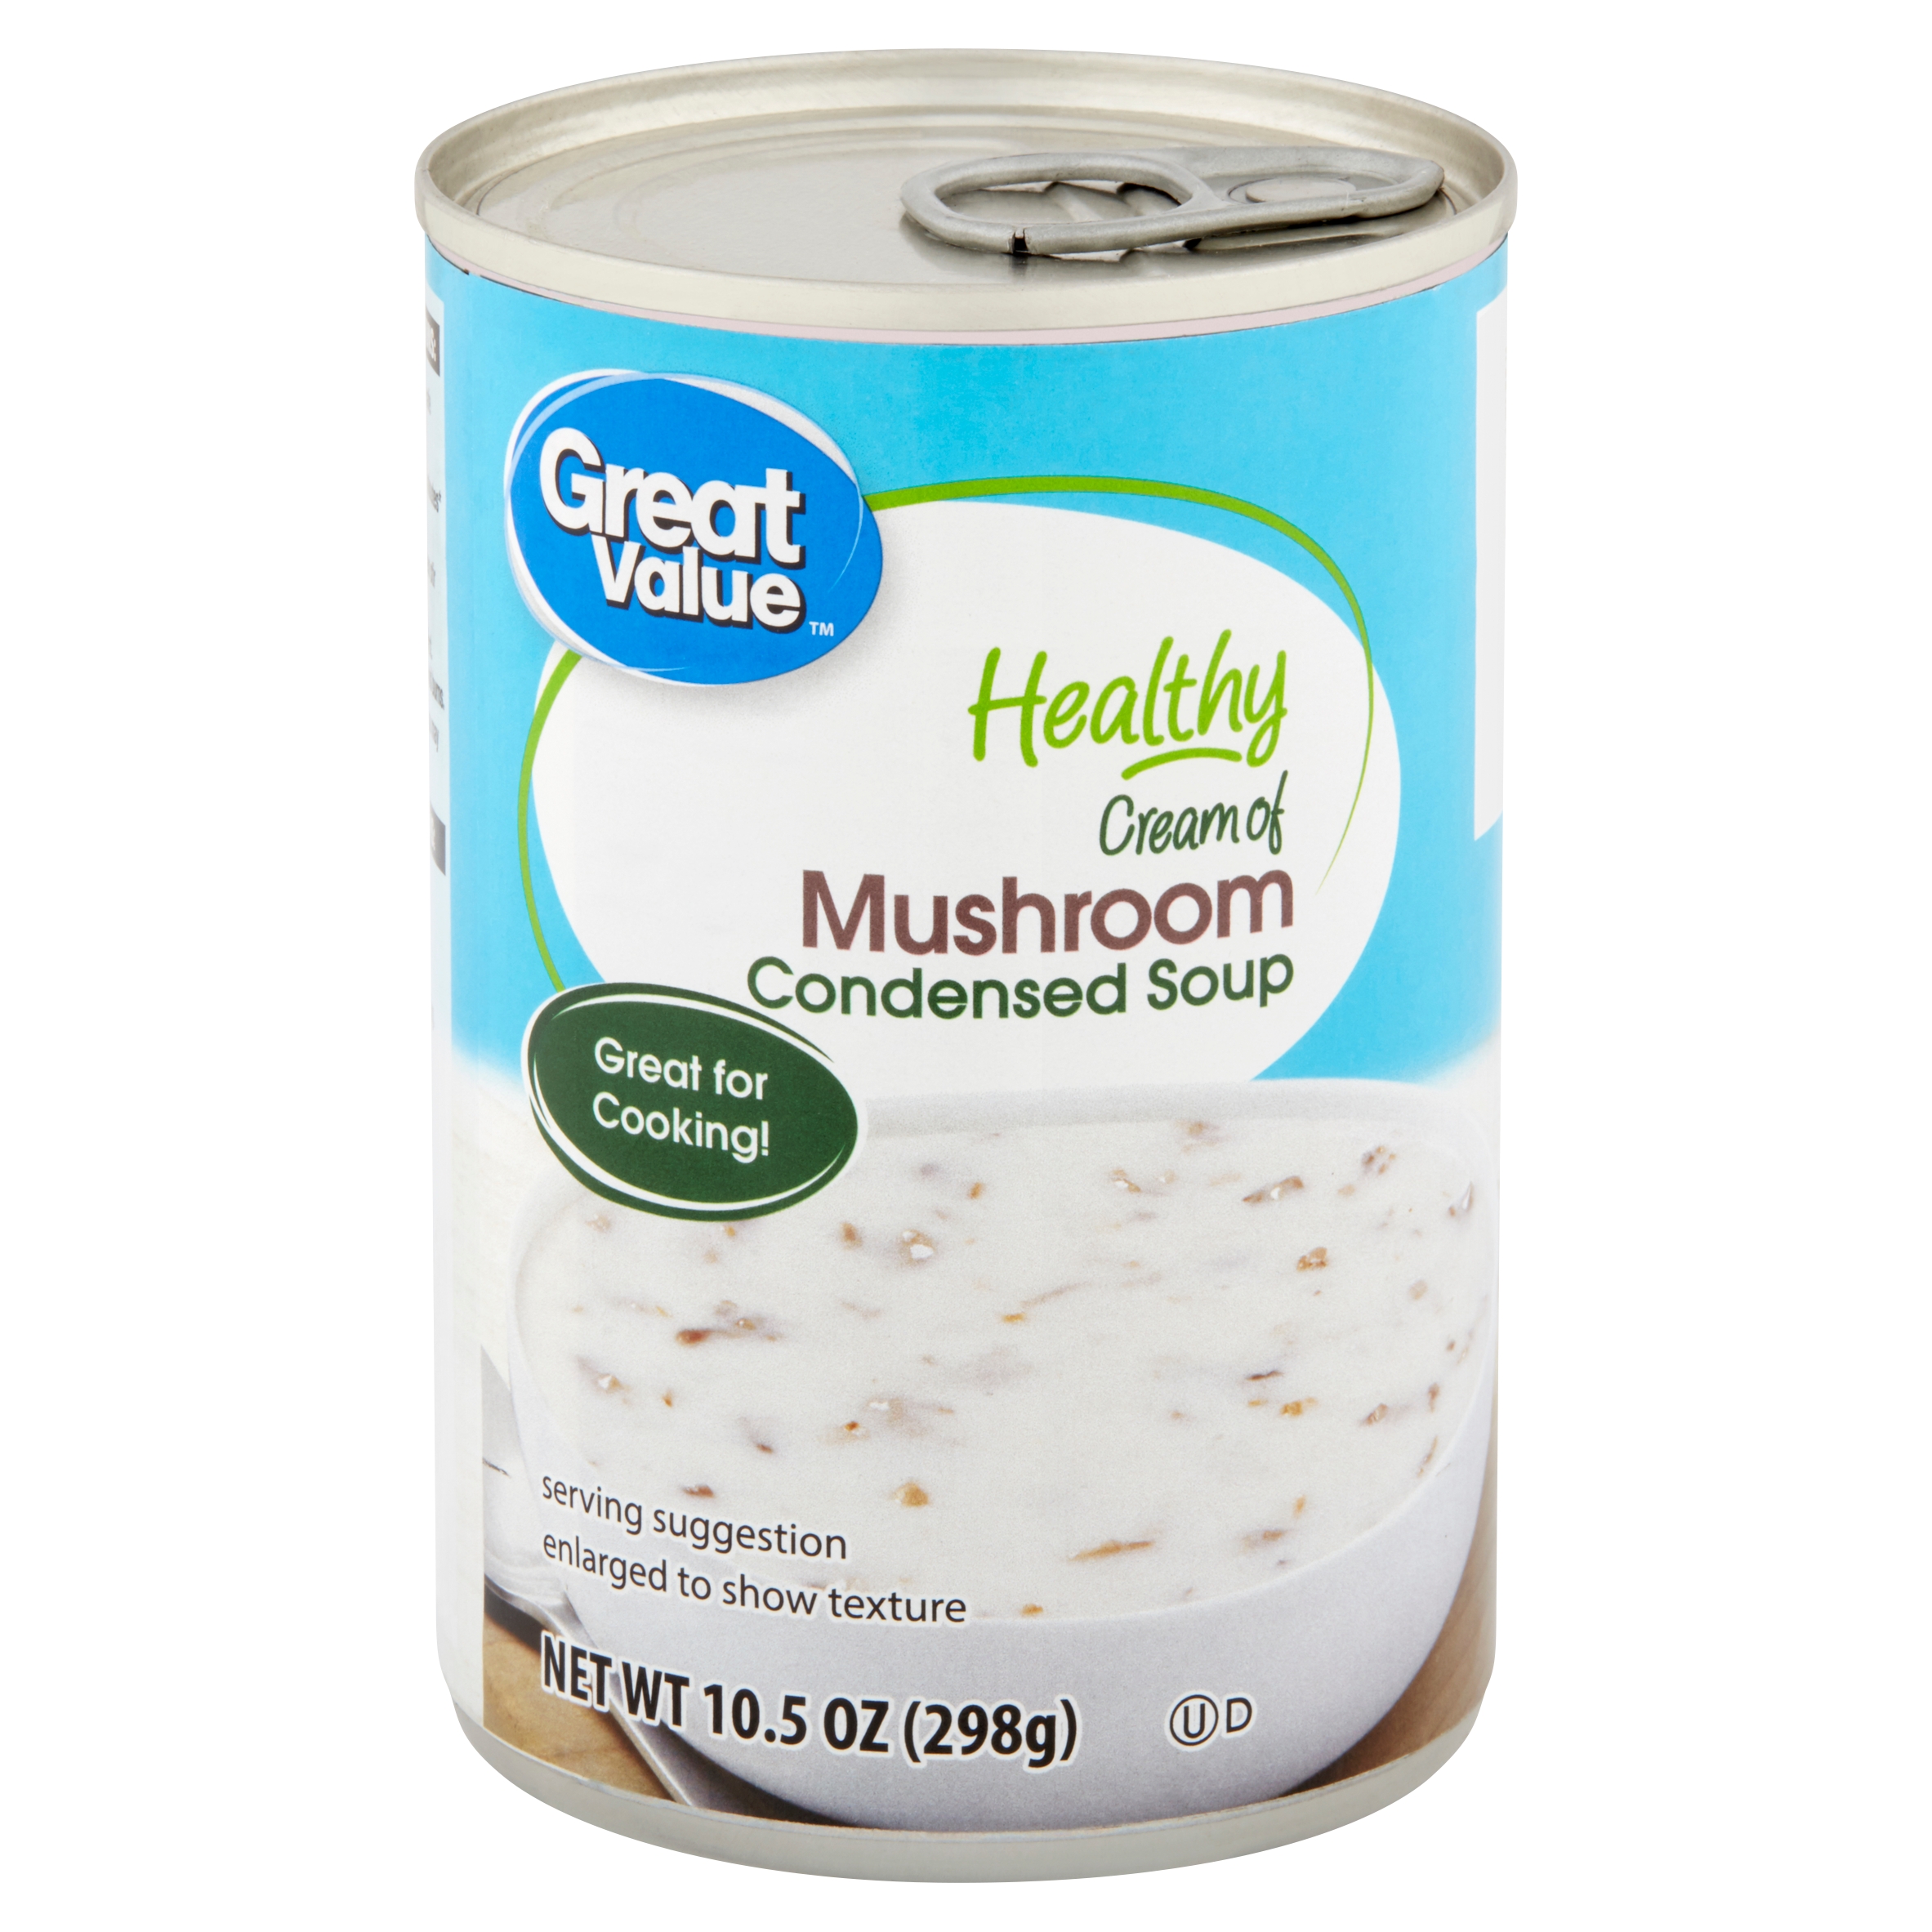 Great Value Healthy Cream of Mushroom Condensed Soup, 10.5 Oz Image